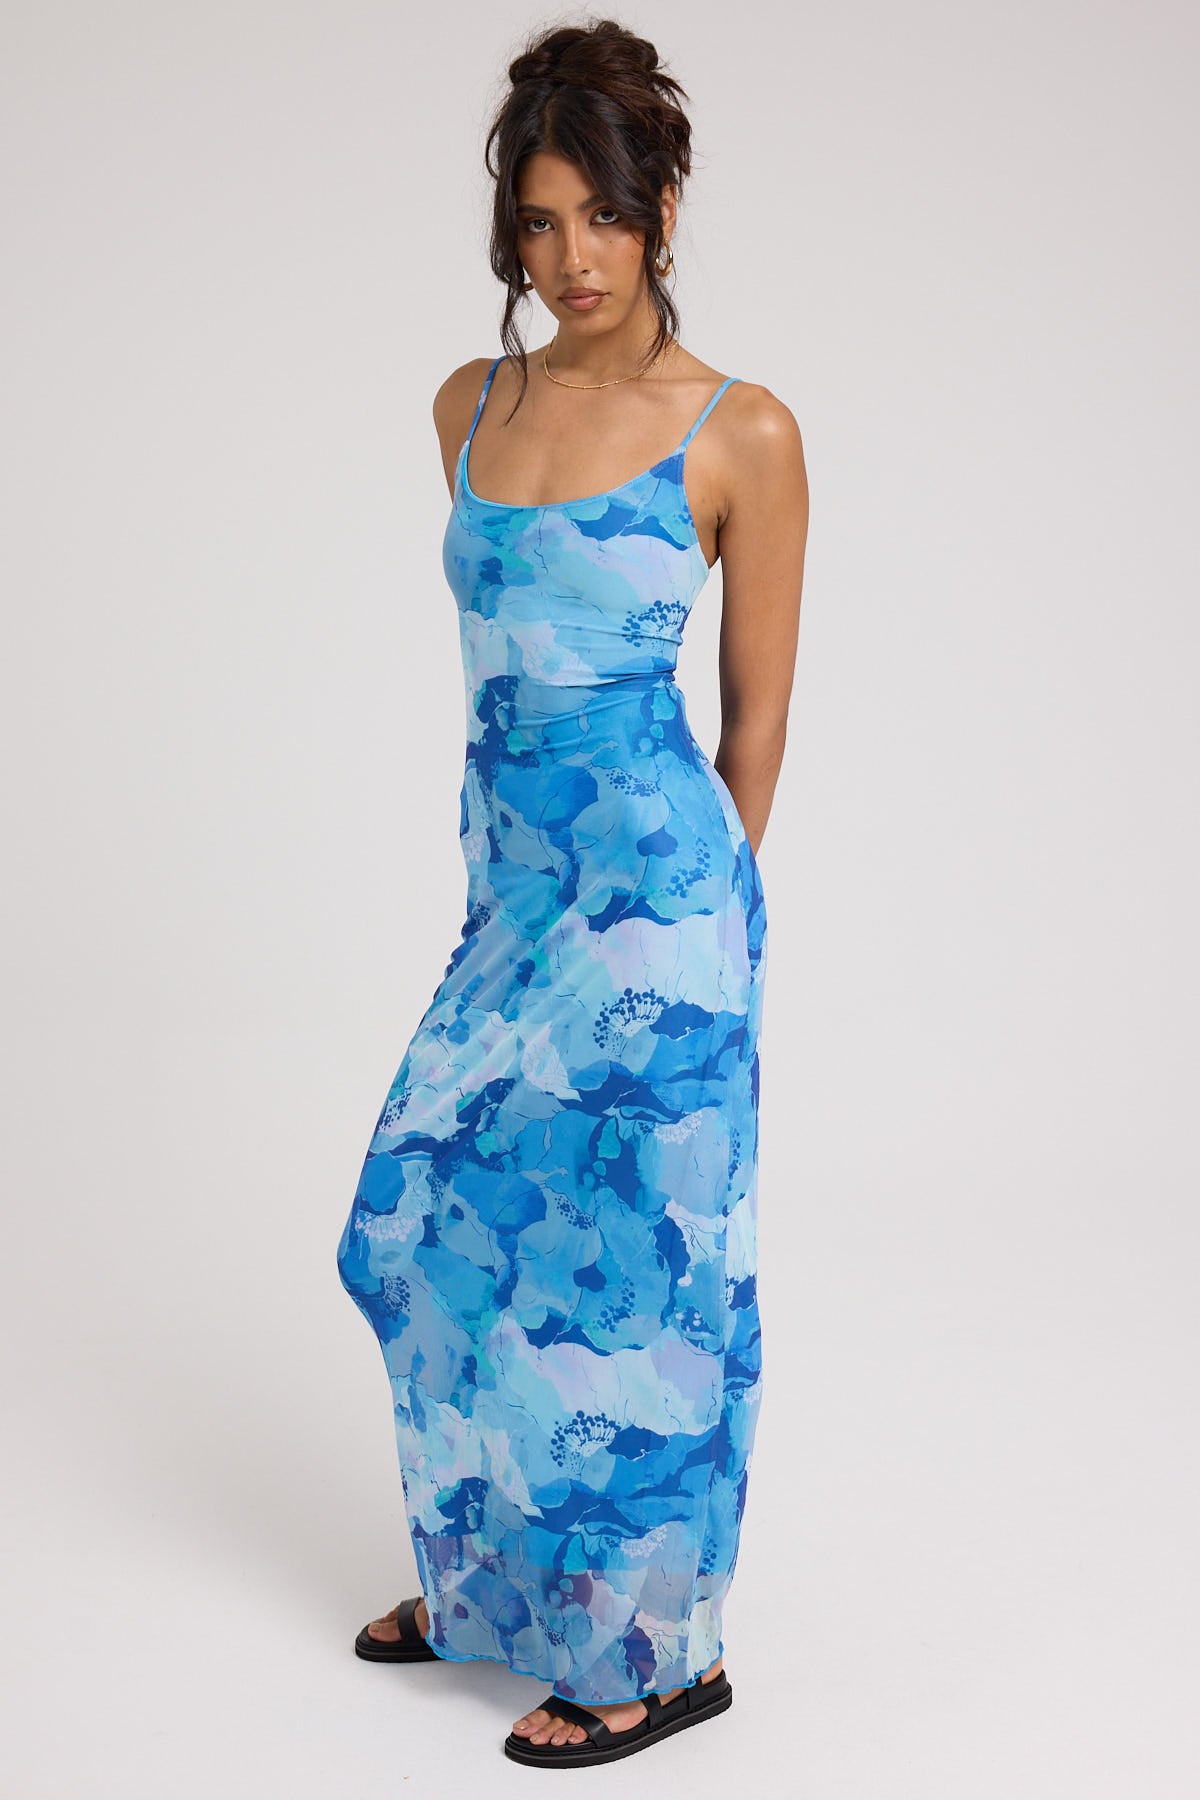 Perfect Stranger Romantic Blues Recycled Mesh Dress Blue Print